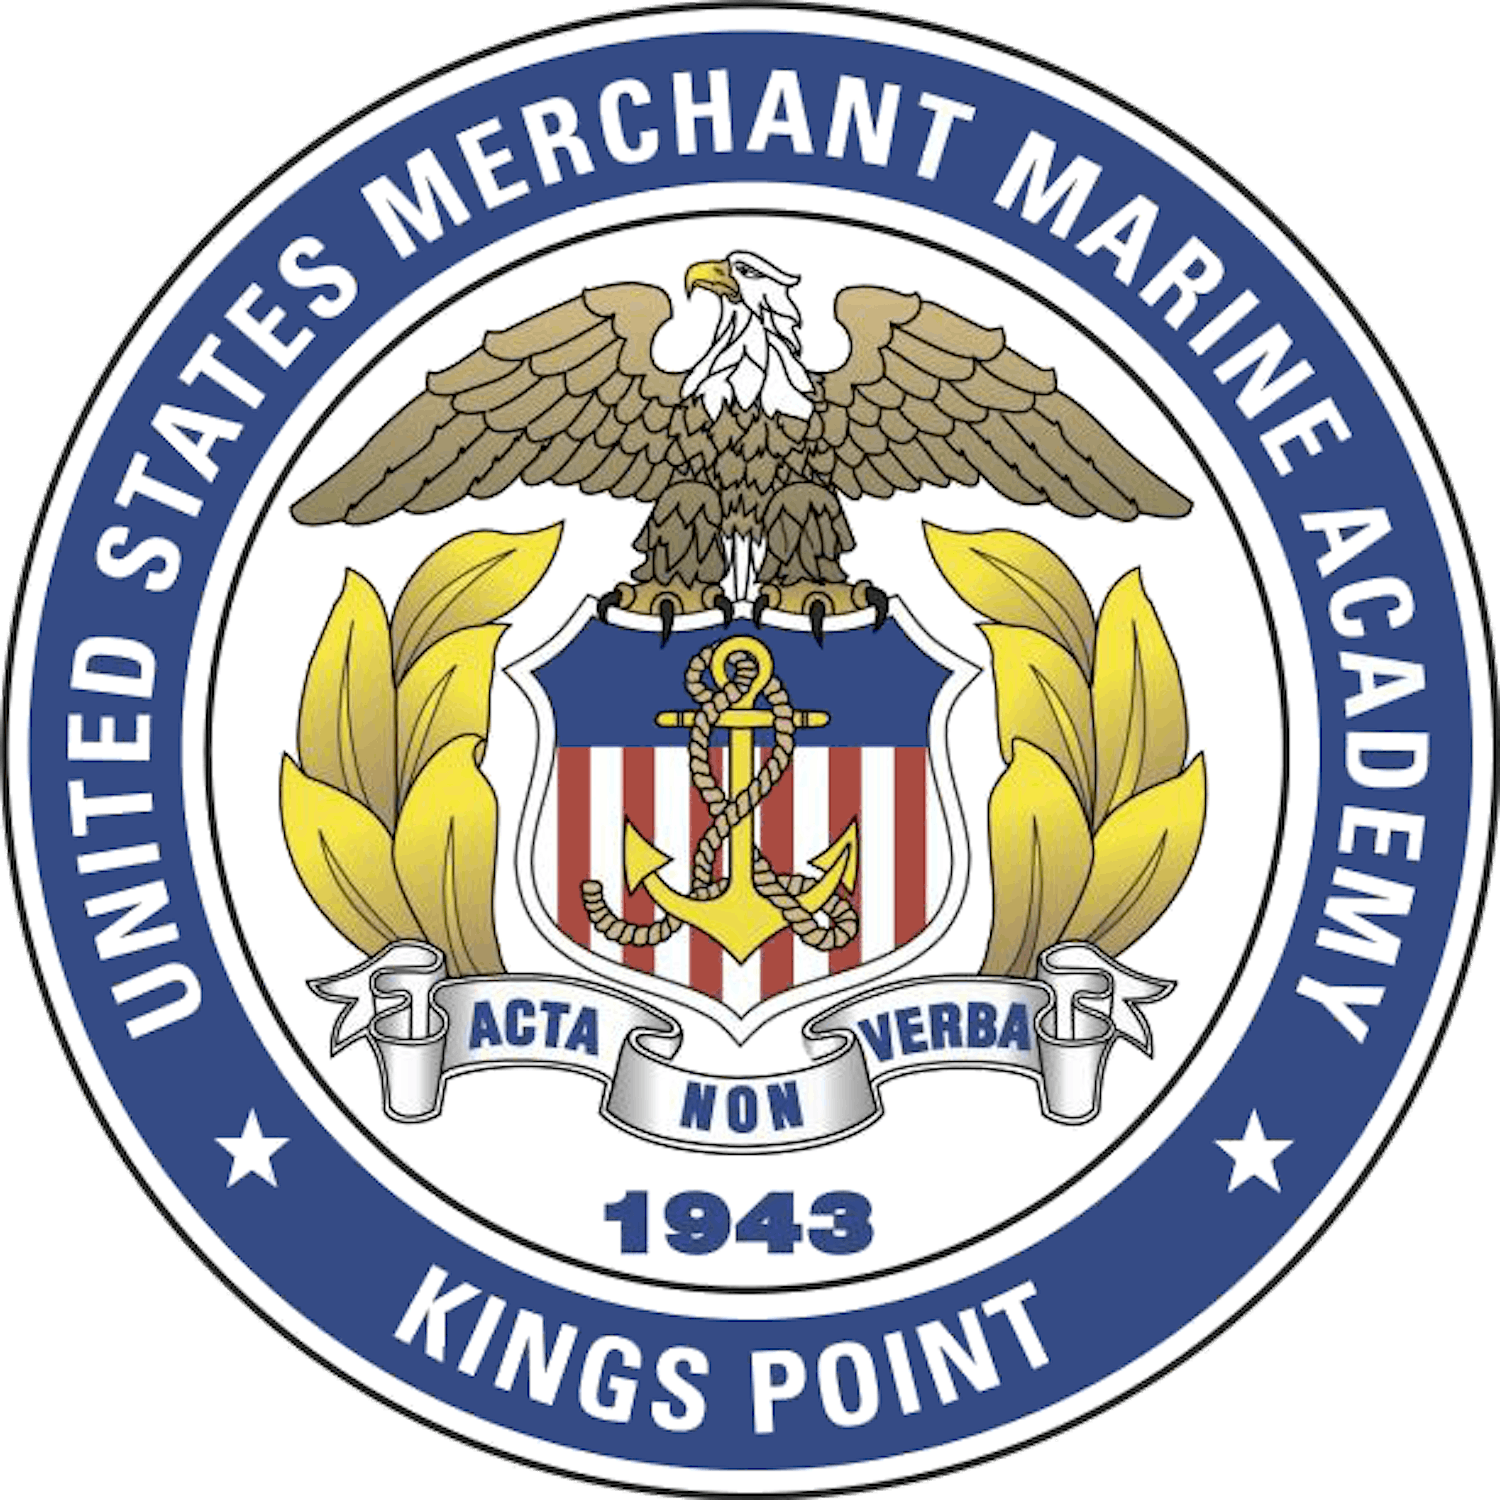 Comprehensive Assessment of the U.S. Merchant Marine Academy National